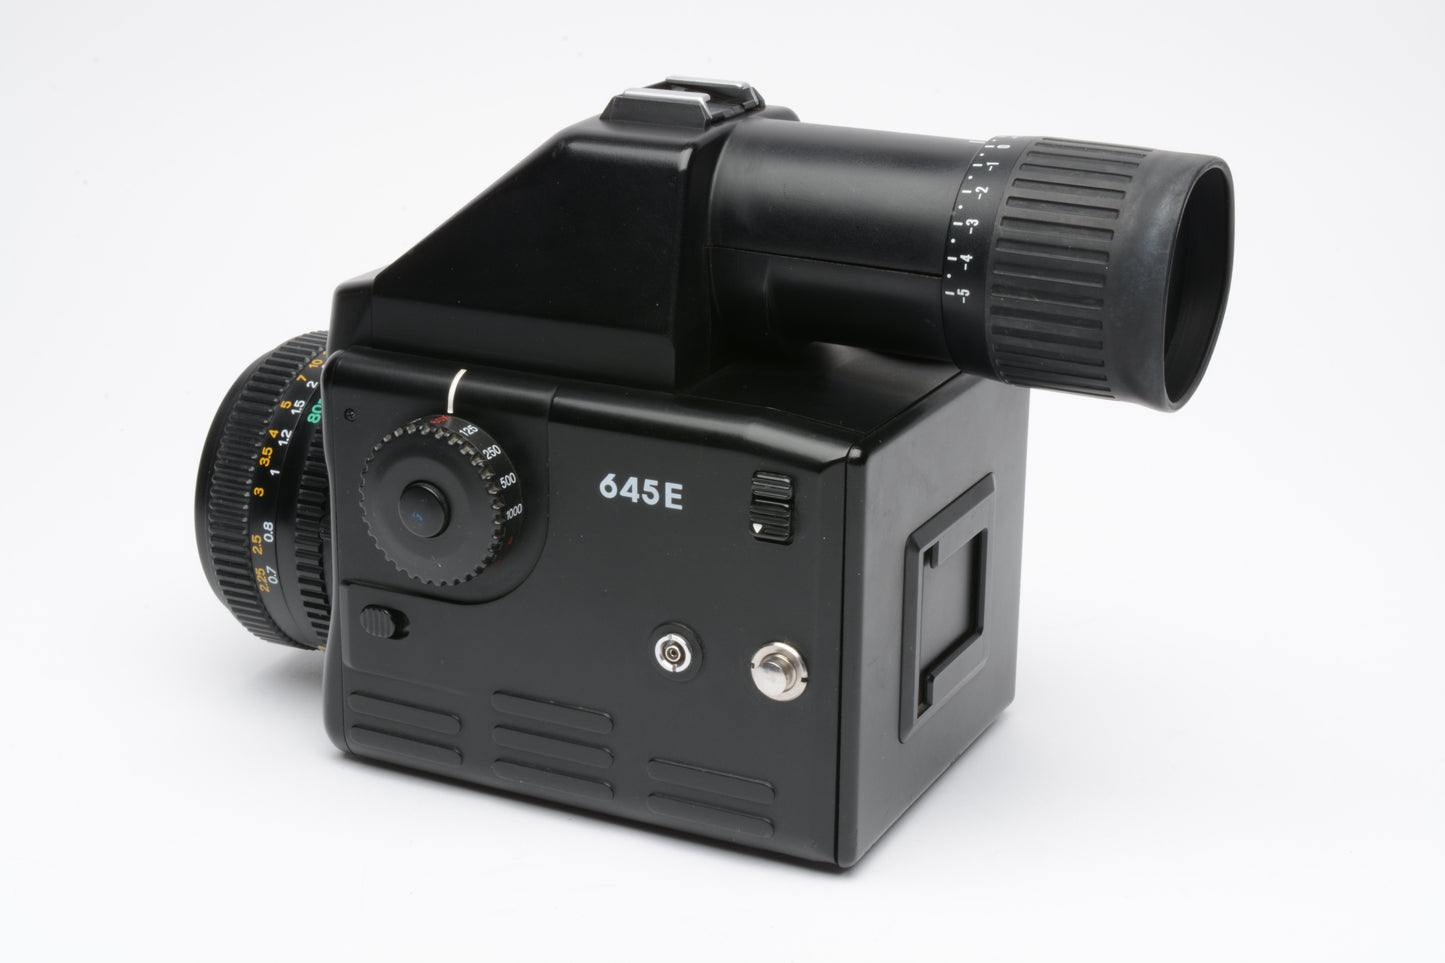 Mamiya 645E Medium format camera w/80mm f2.8 N lens, 120 Insert, clean, tested